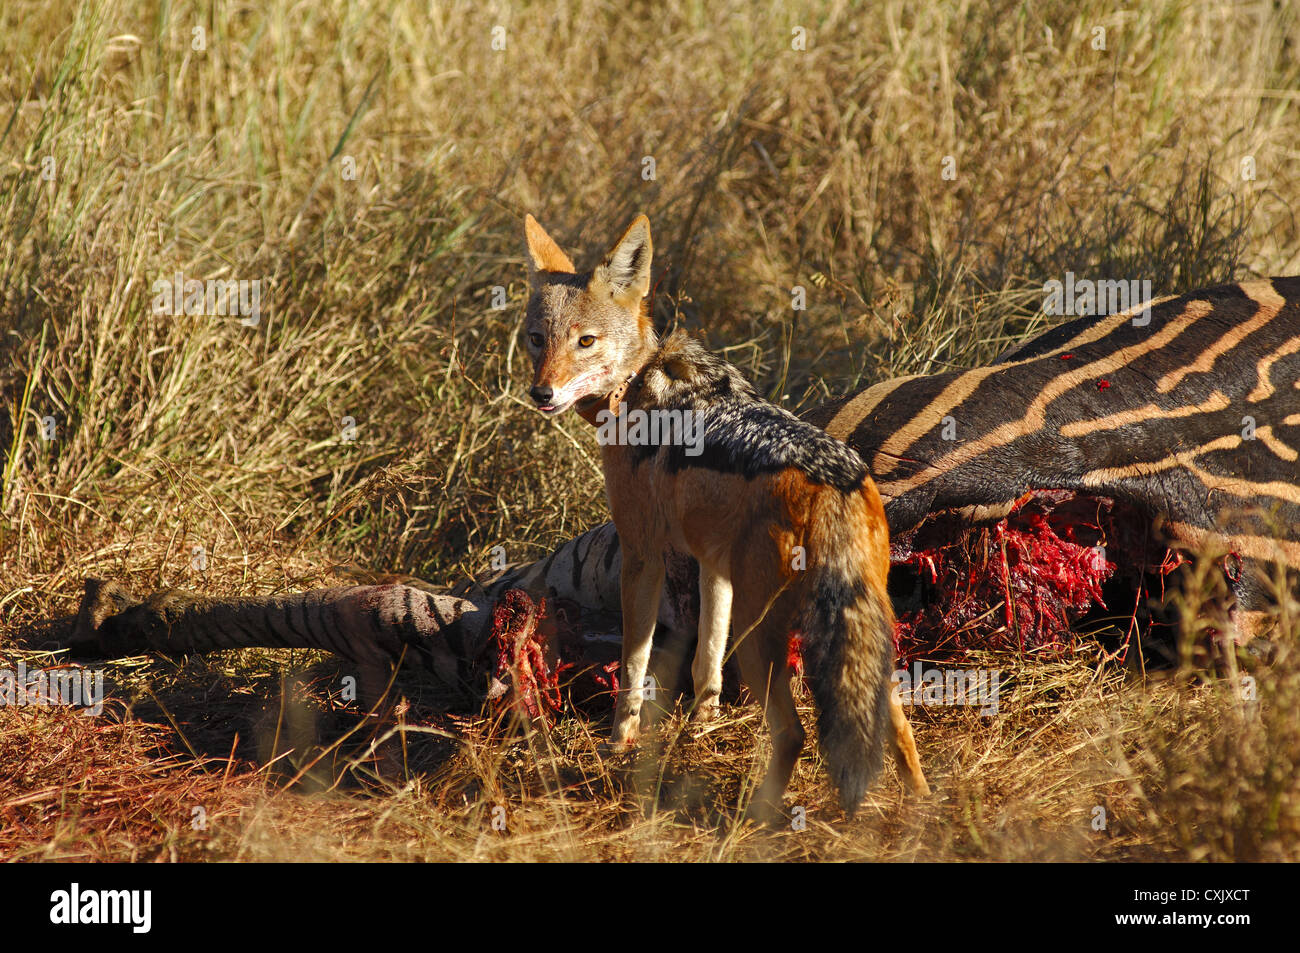 Black-backed jackal at a zebra carcass Stock Photo